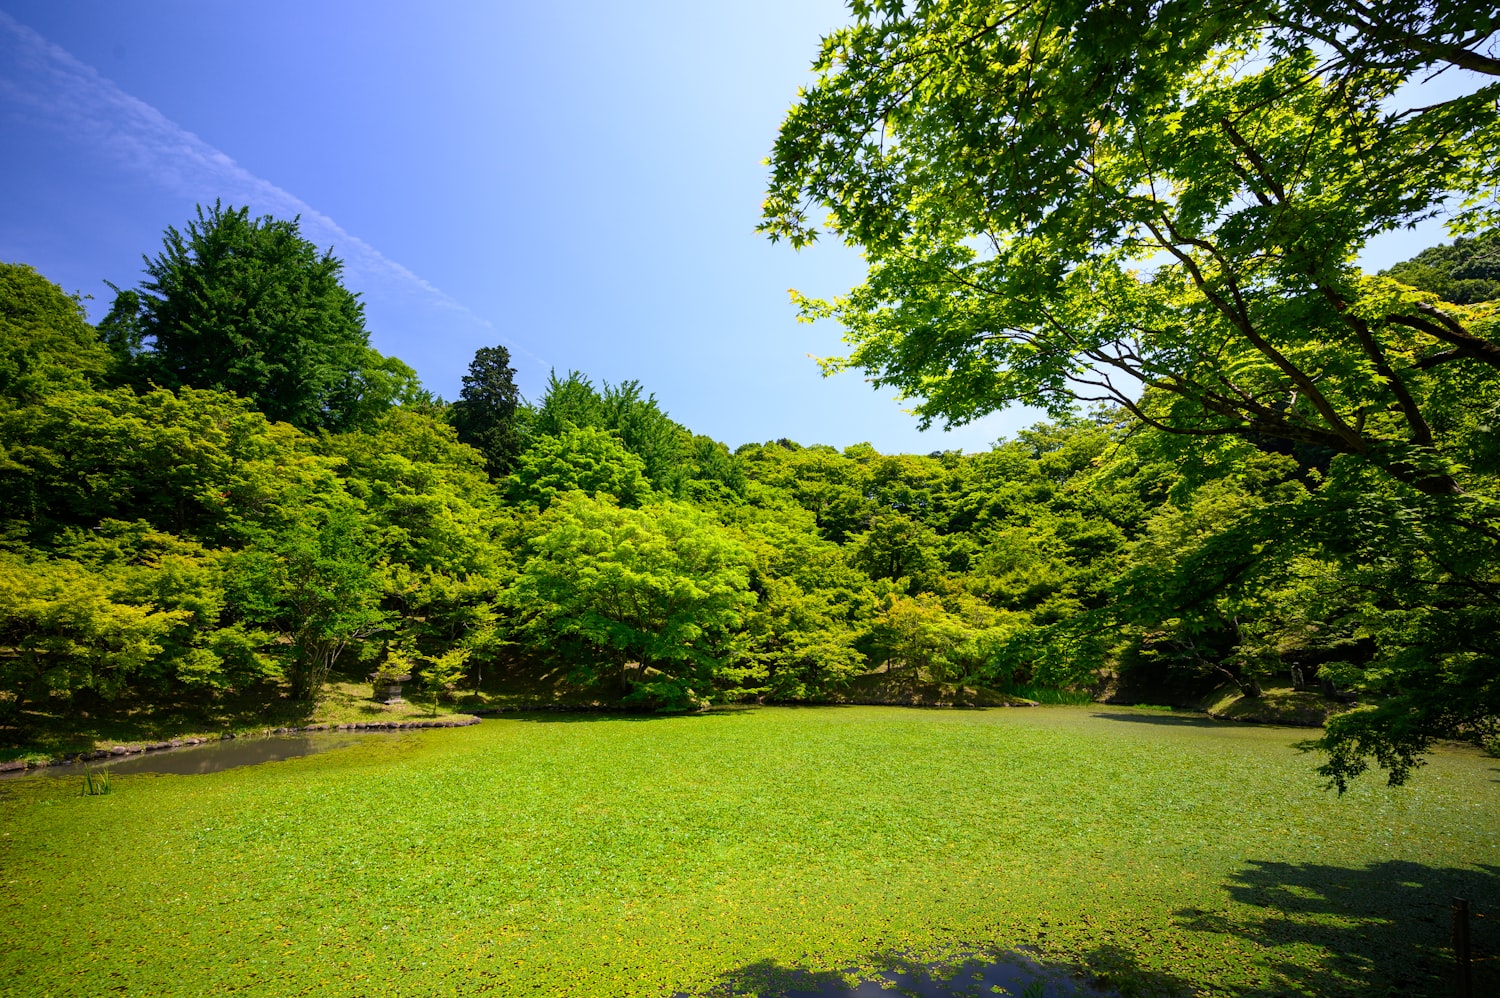 grass field with trees during daytime by Kouji Tsuru